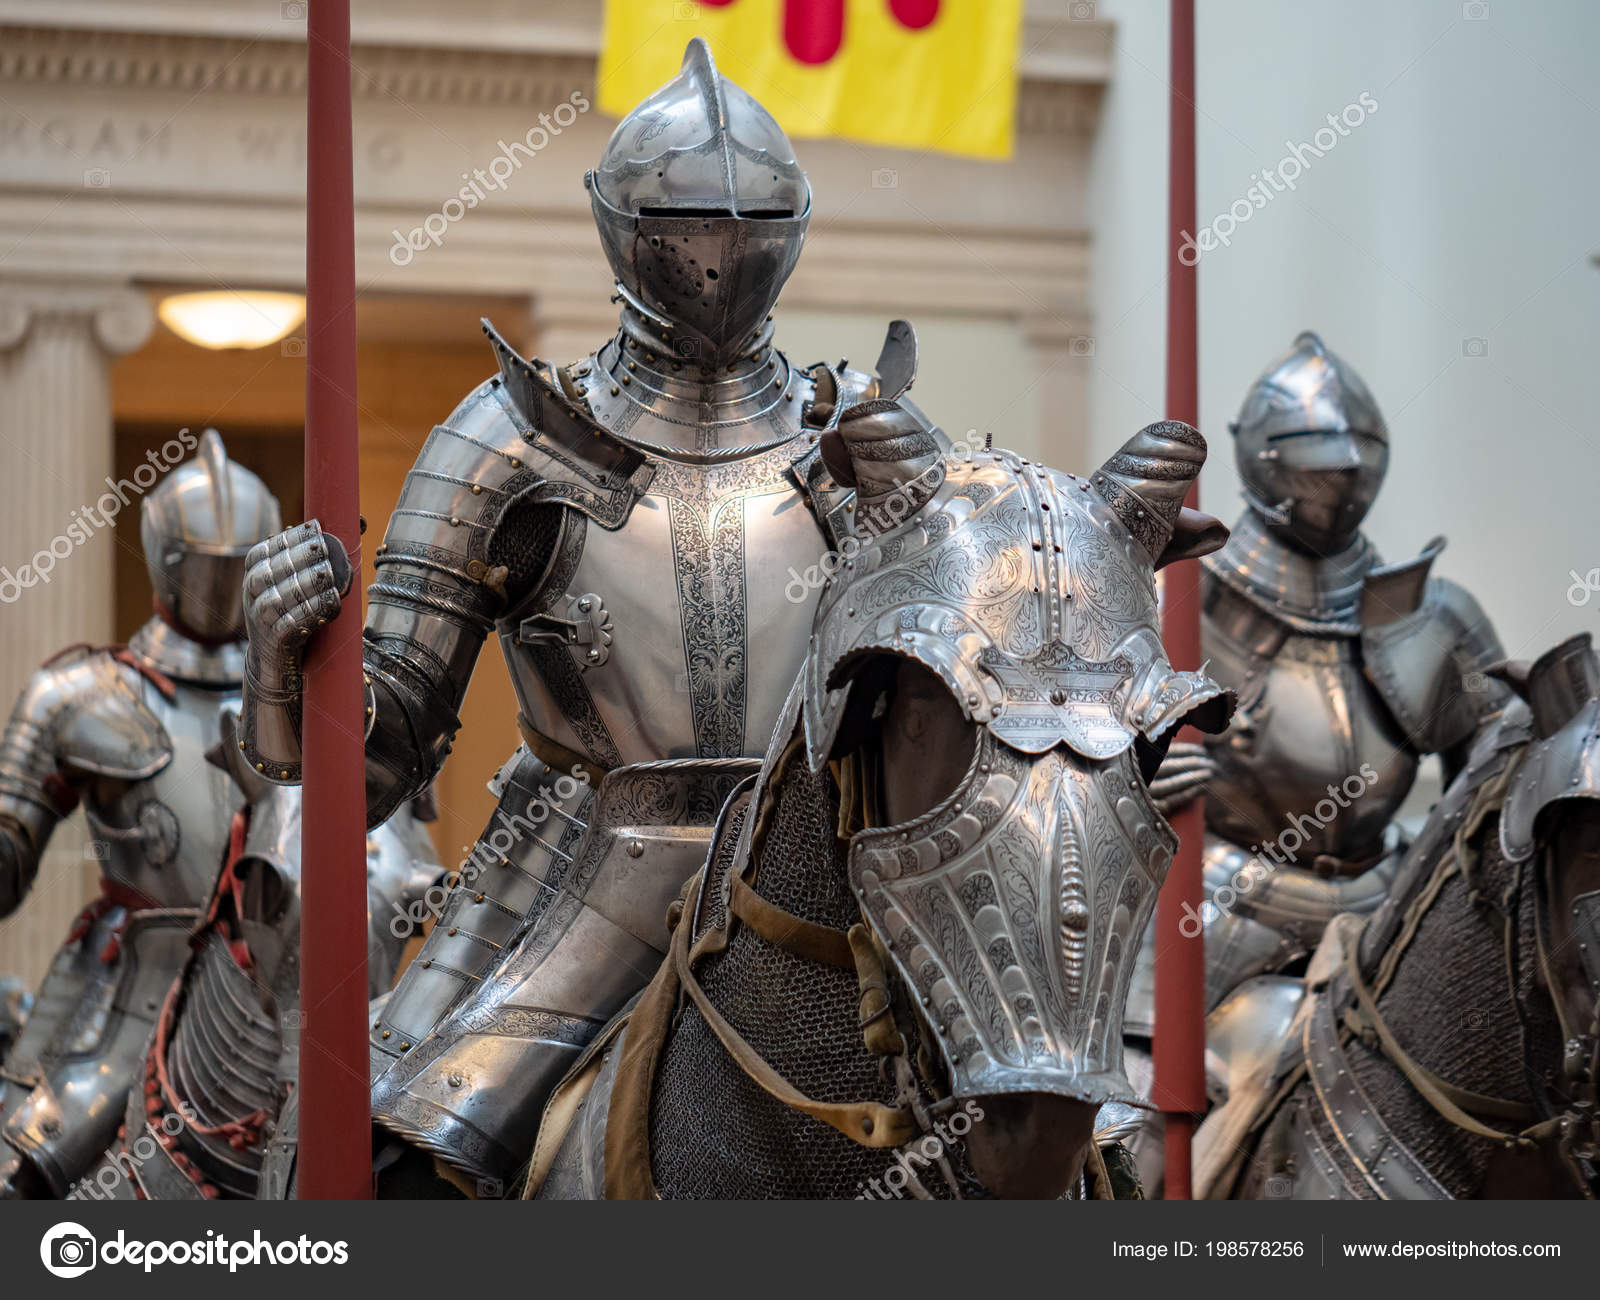 depositphotos_198578256-stock-photo-group-16th-century-knights-wearing.jpg